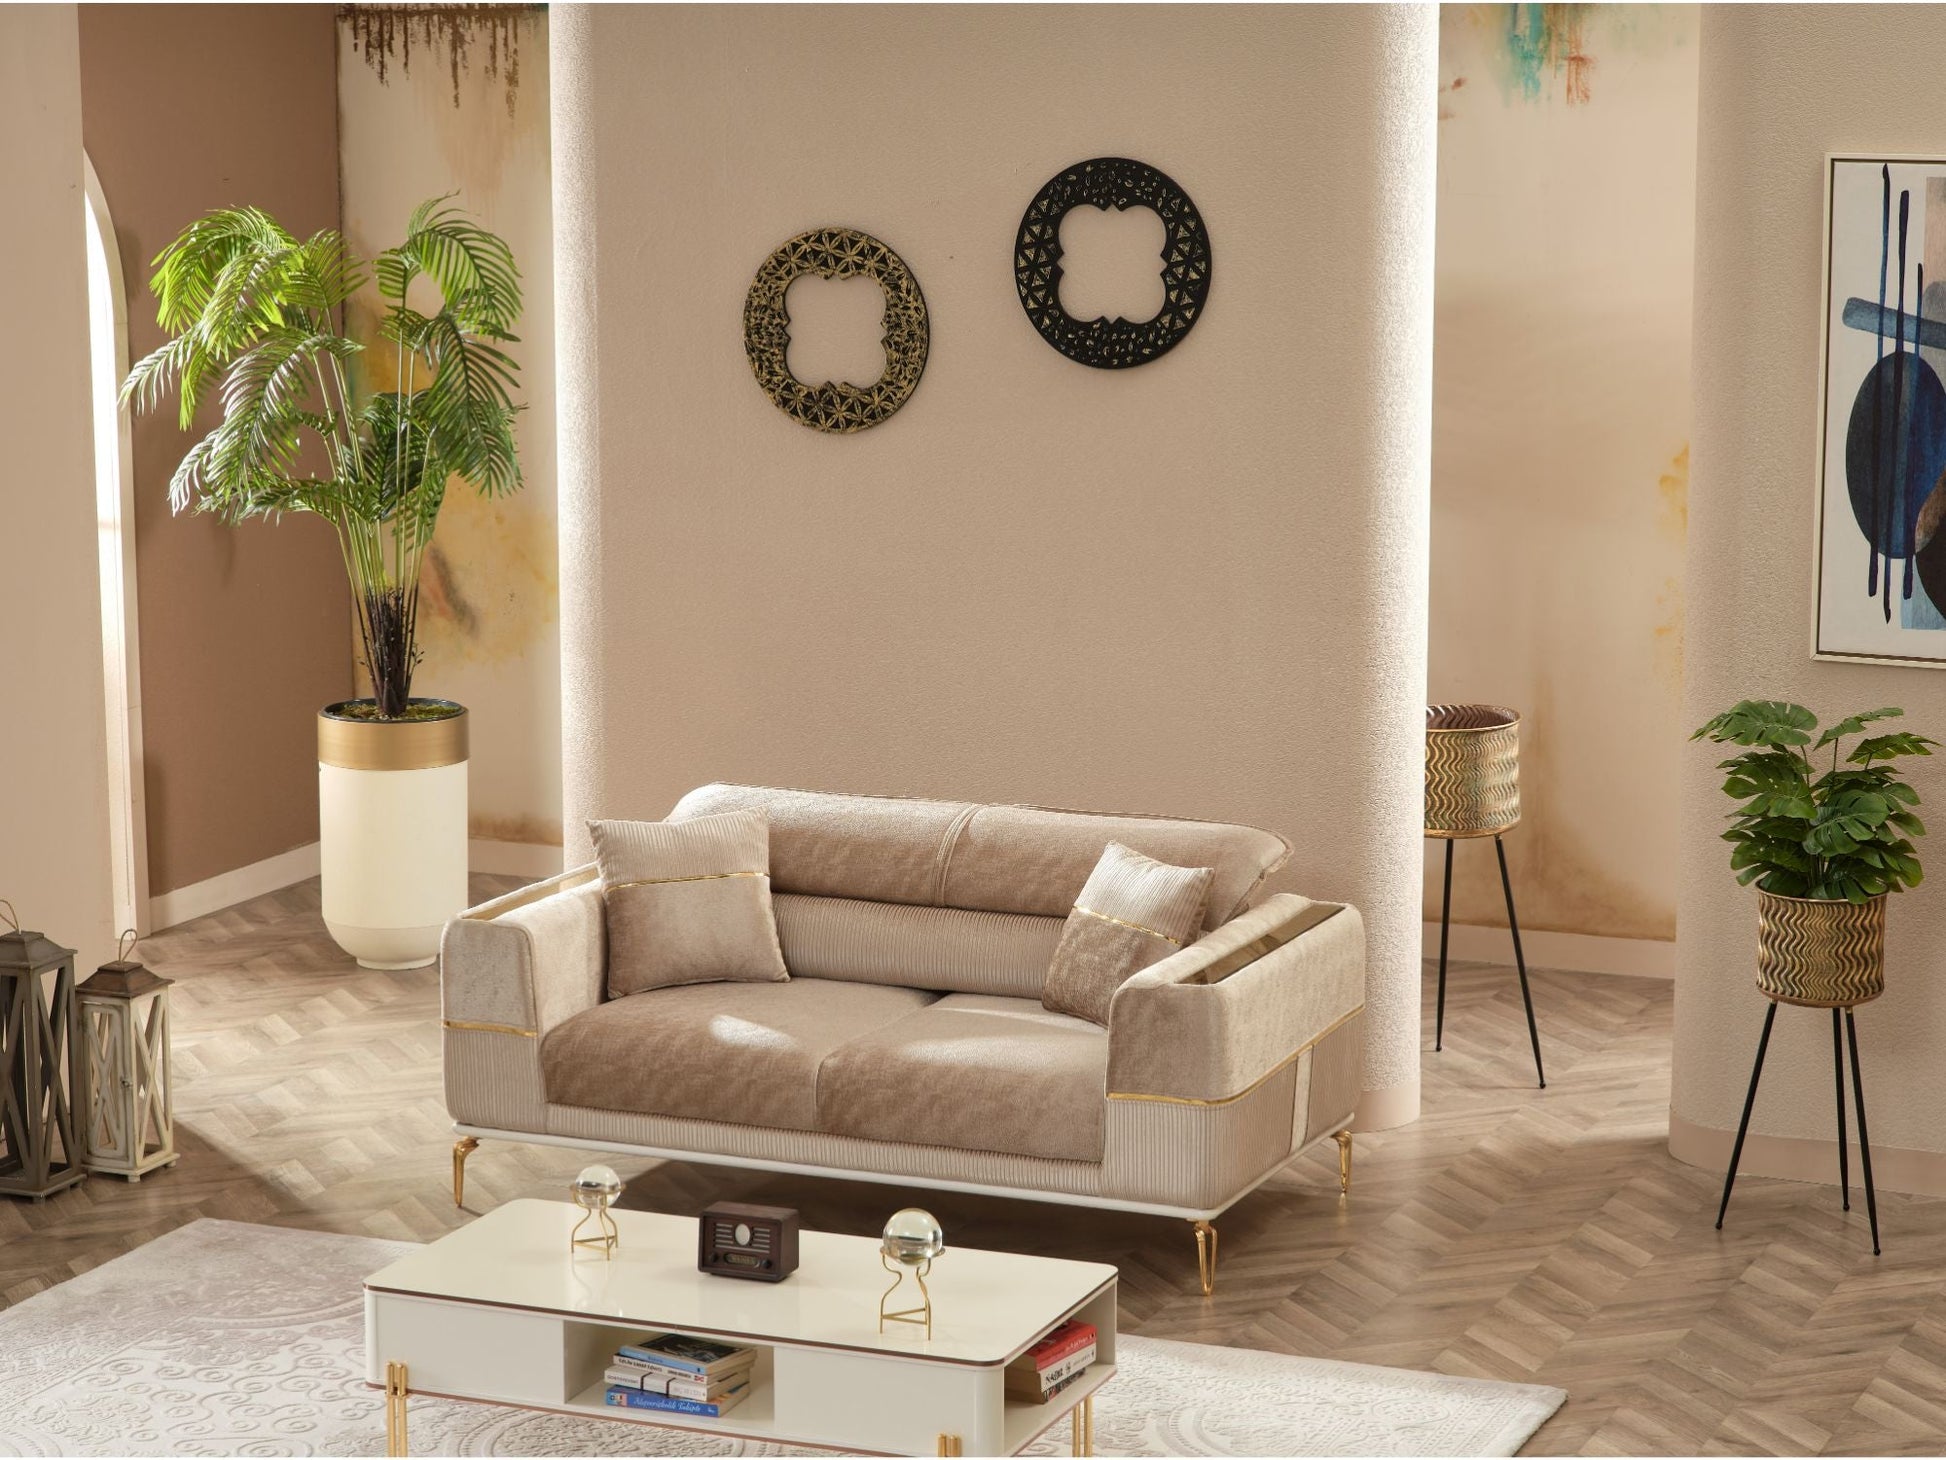 Convertible Livingroom (2 Sofa & 2 Chair) Beige